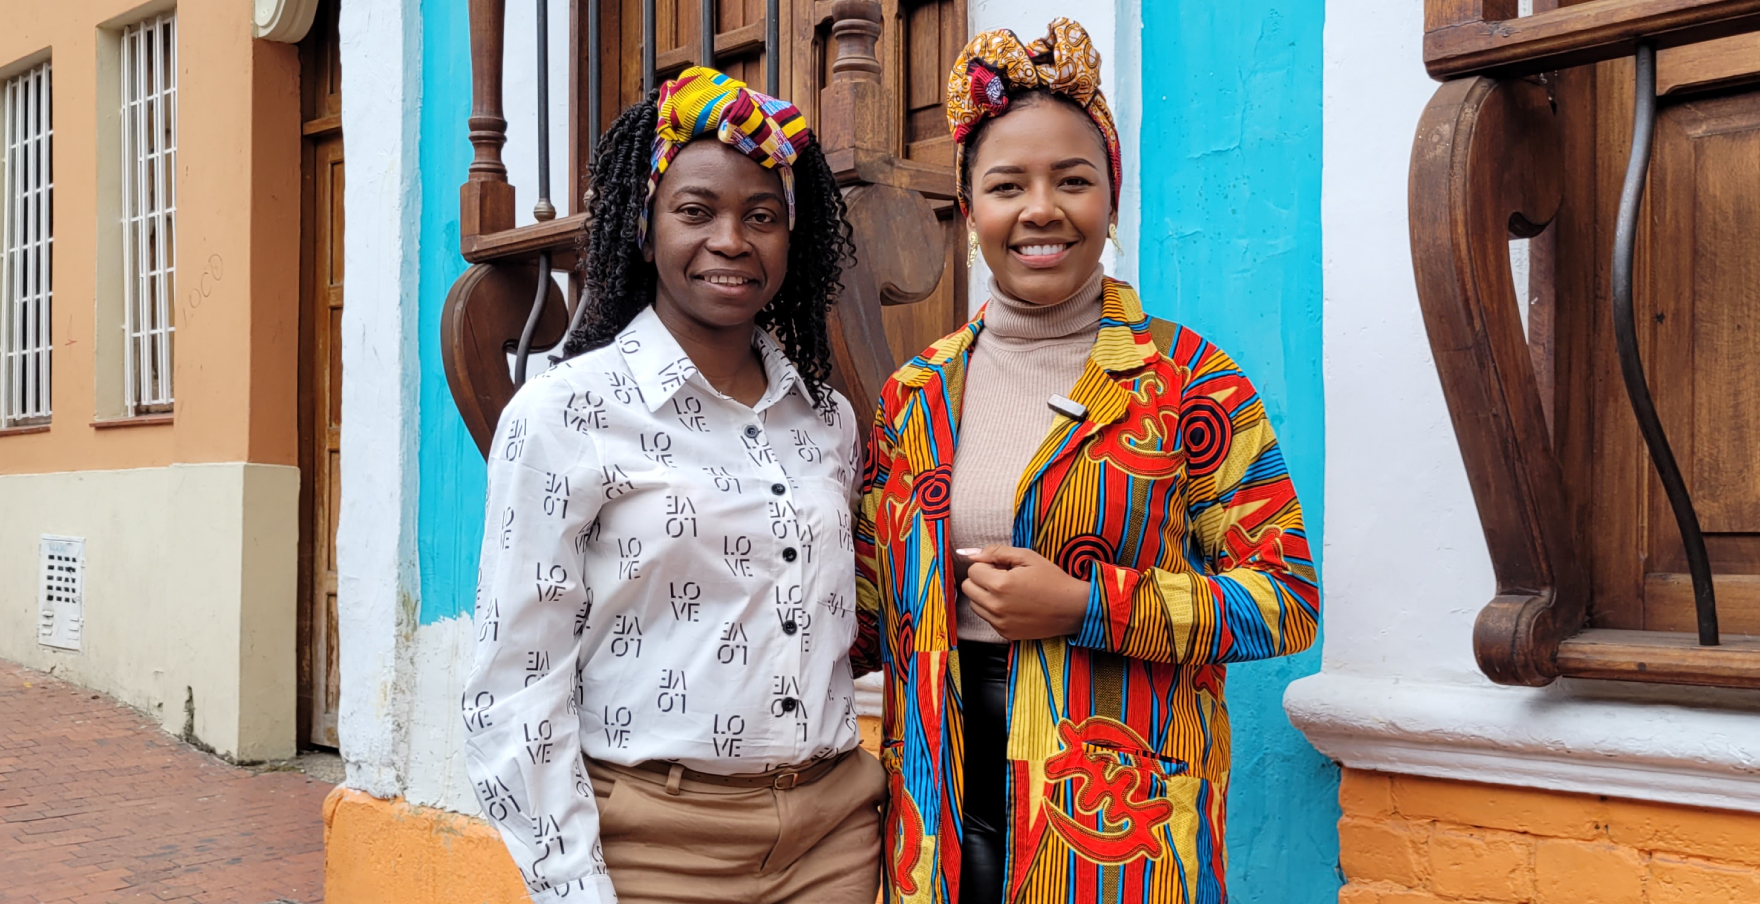 Mujeres afrocolombiana felices